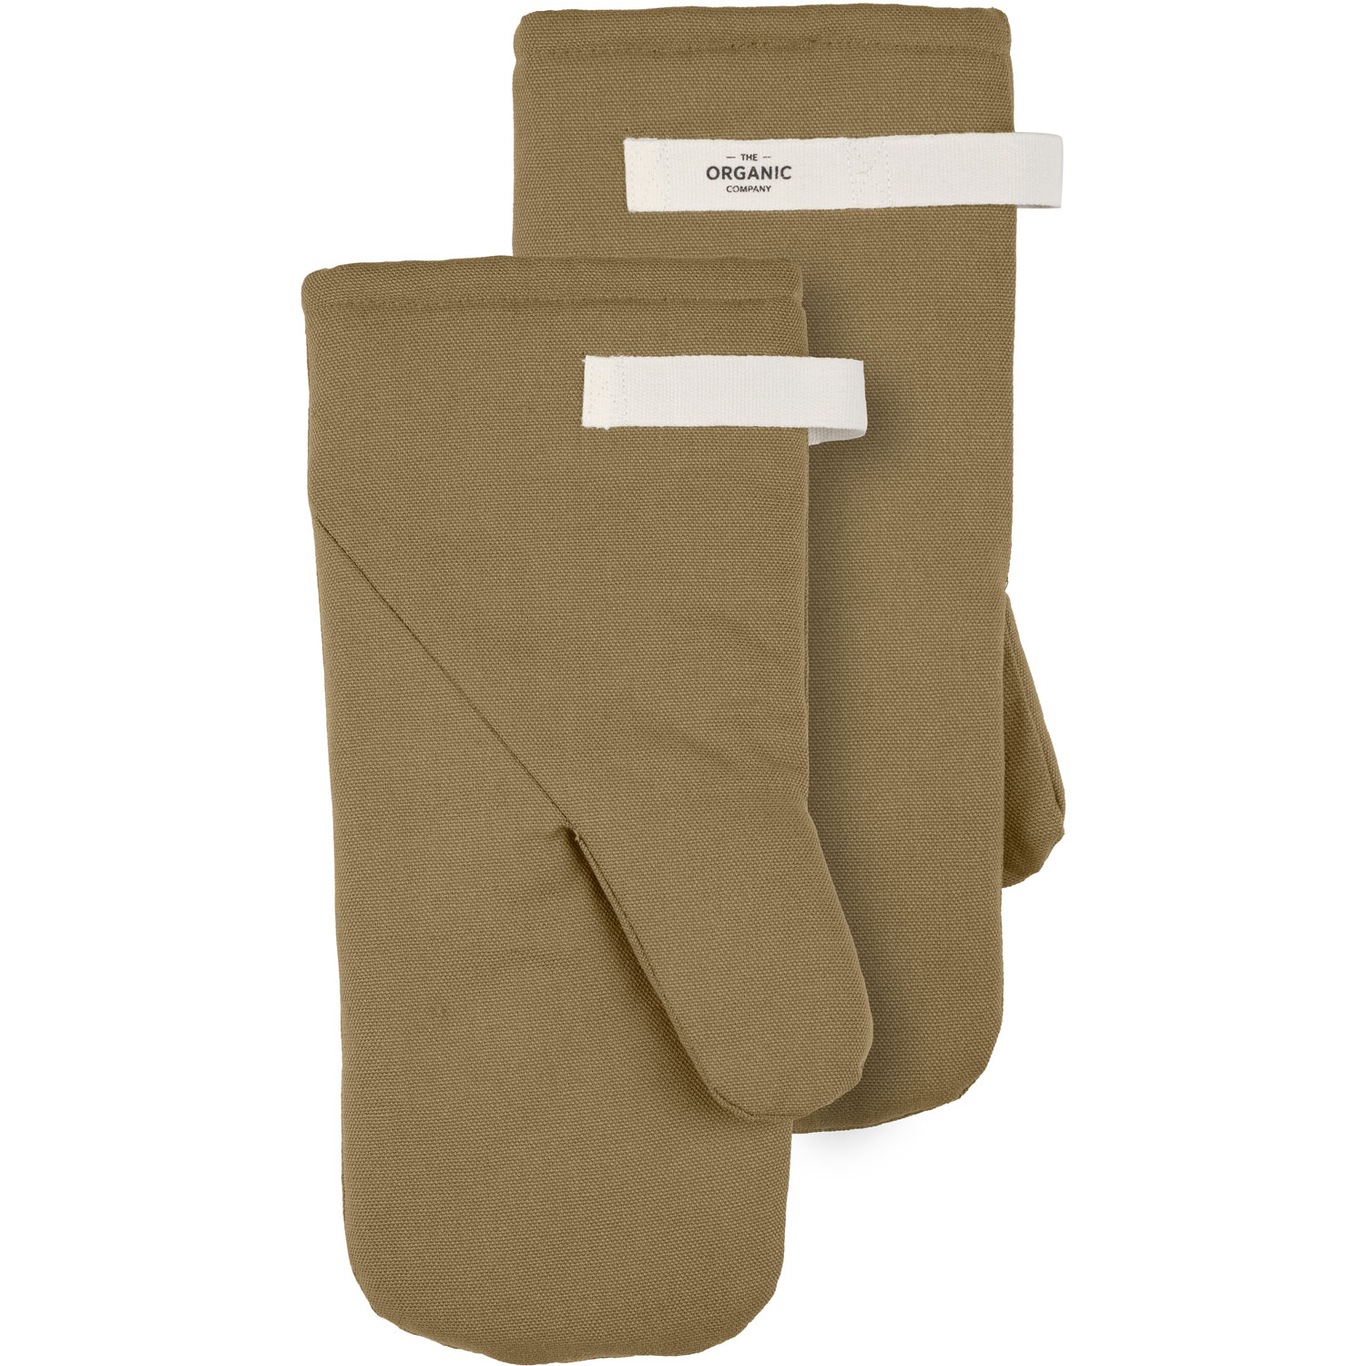 Oven Glove Medium 2-pack, Khaki